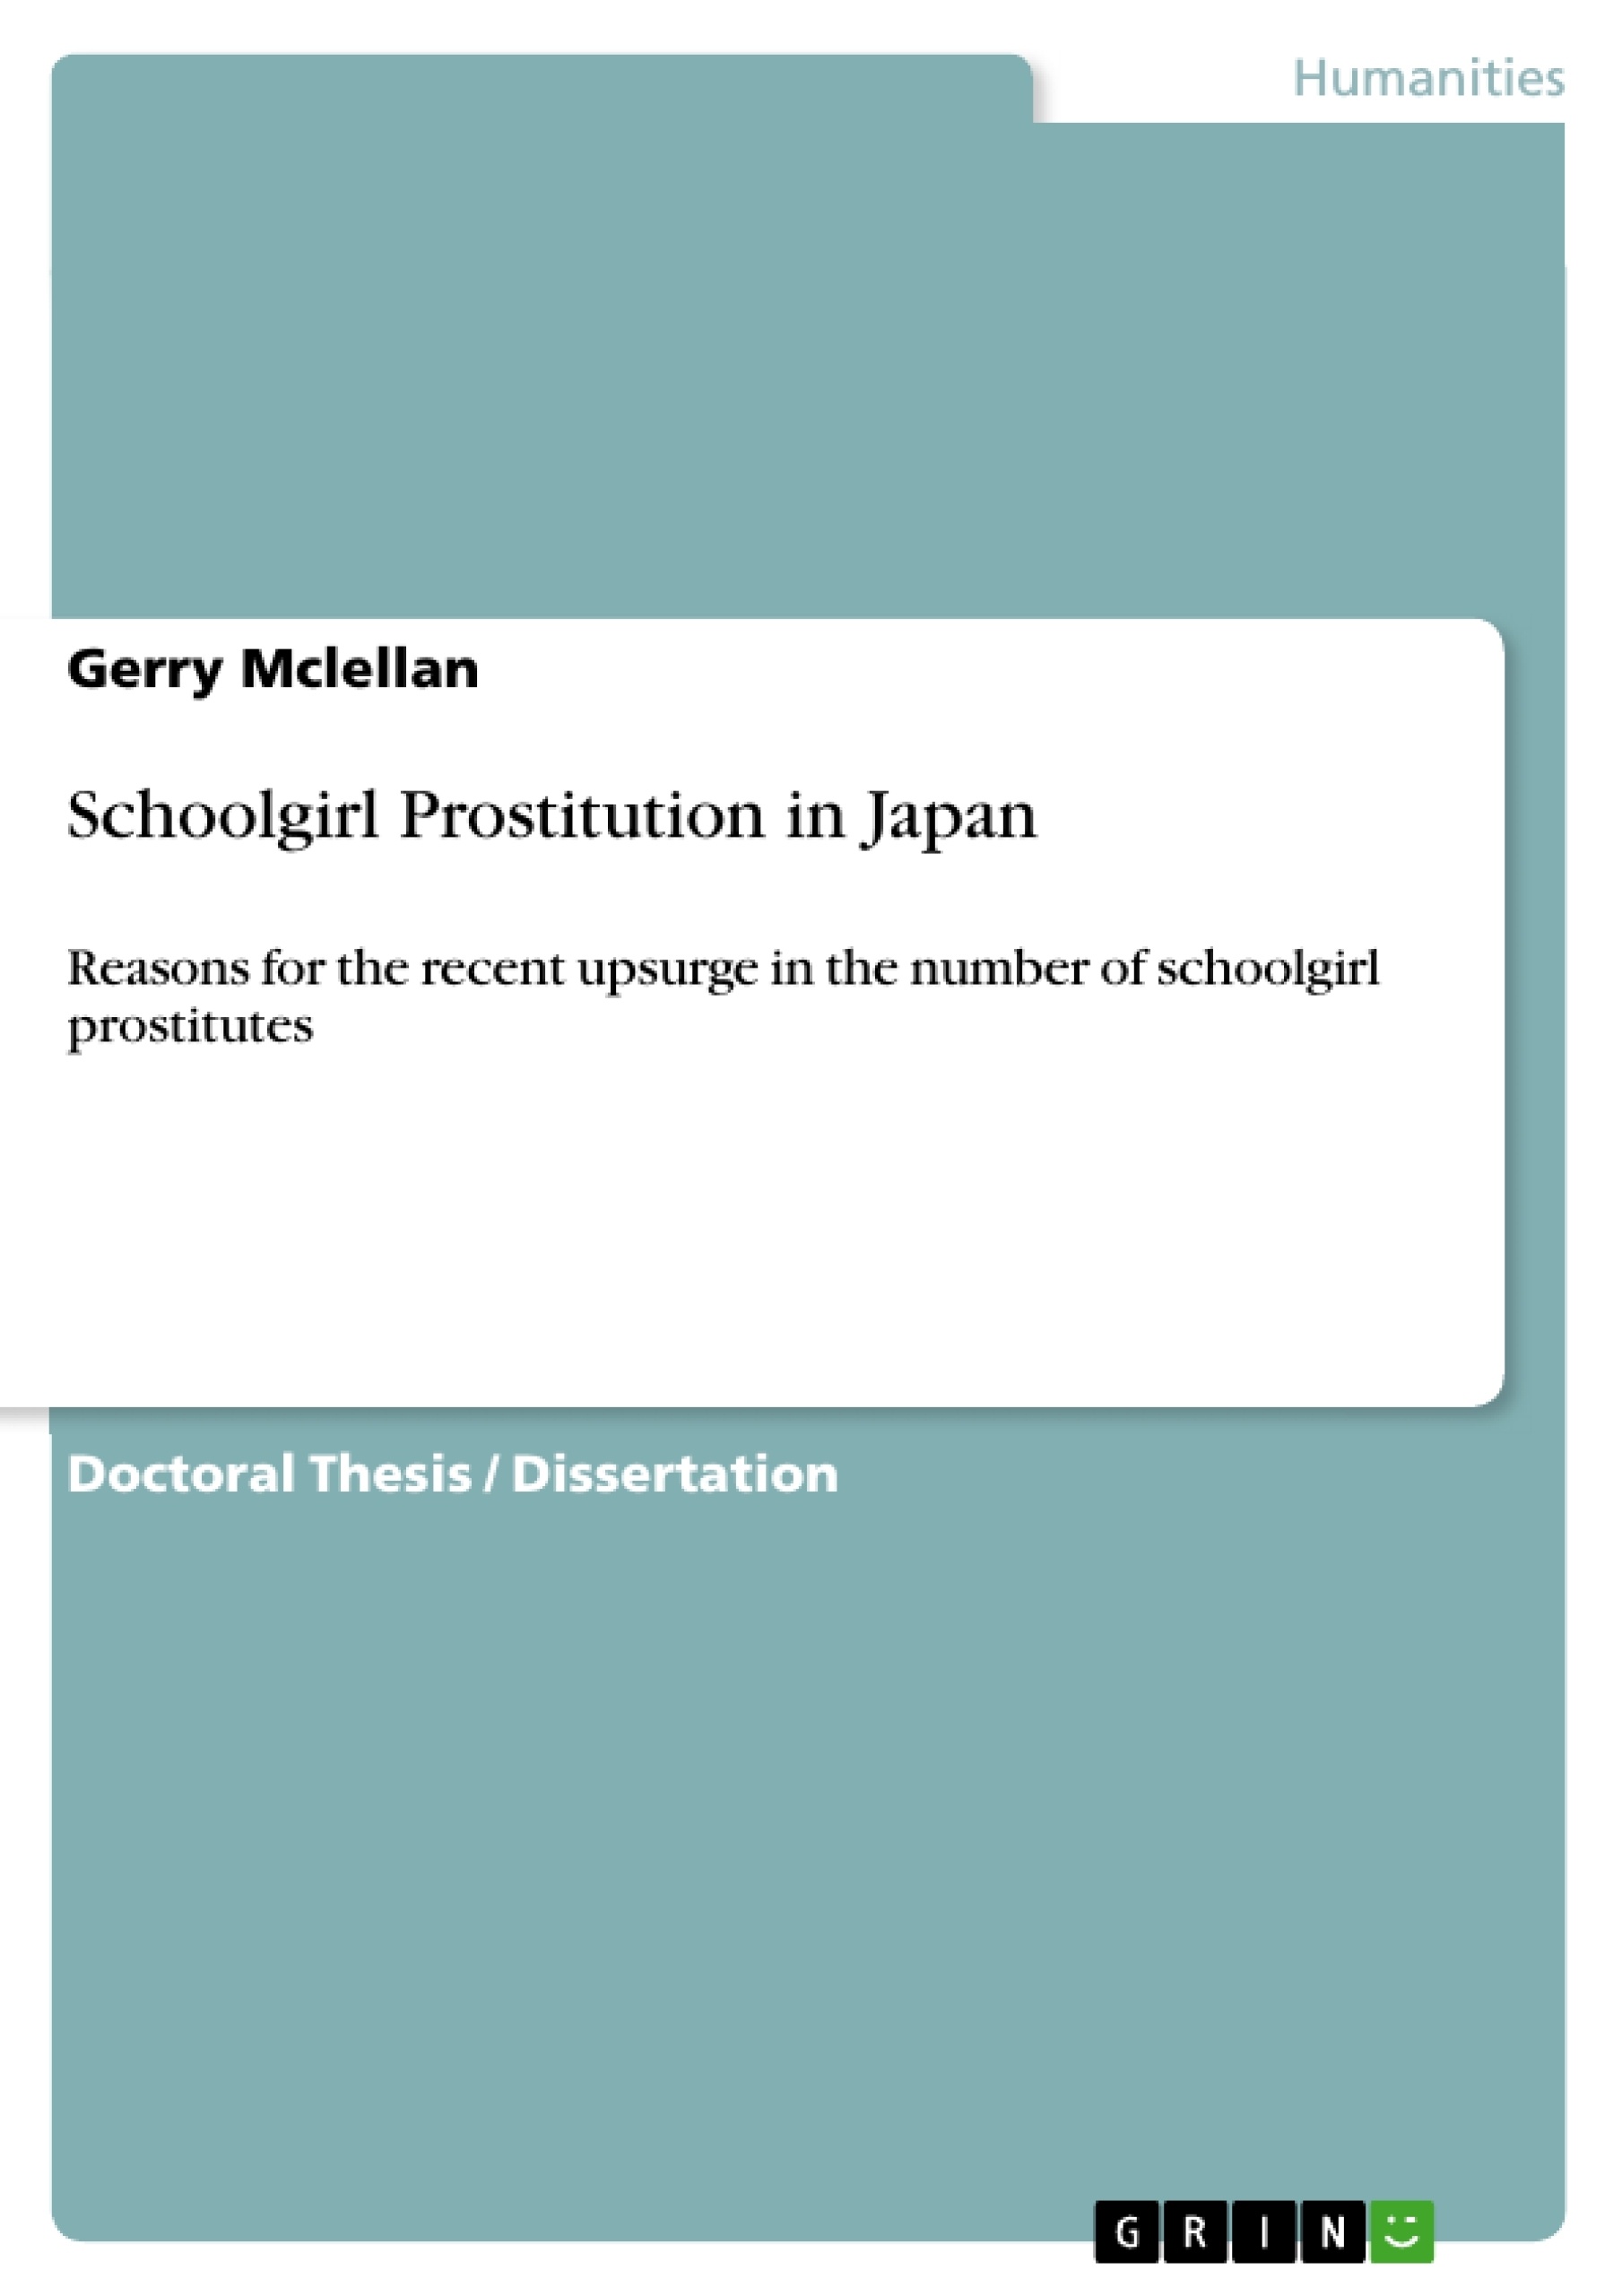 1809px x 2560px - GRIN - Schoolgirl Prostitution in Japan